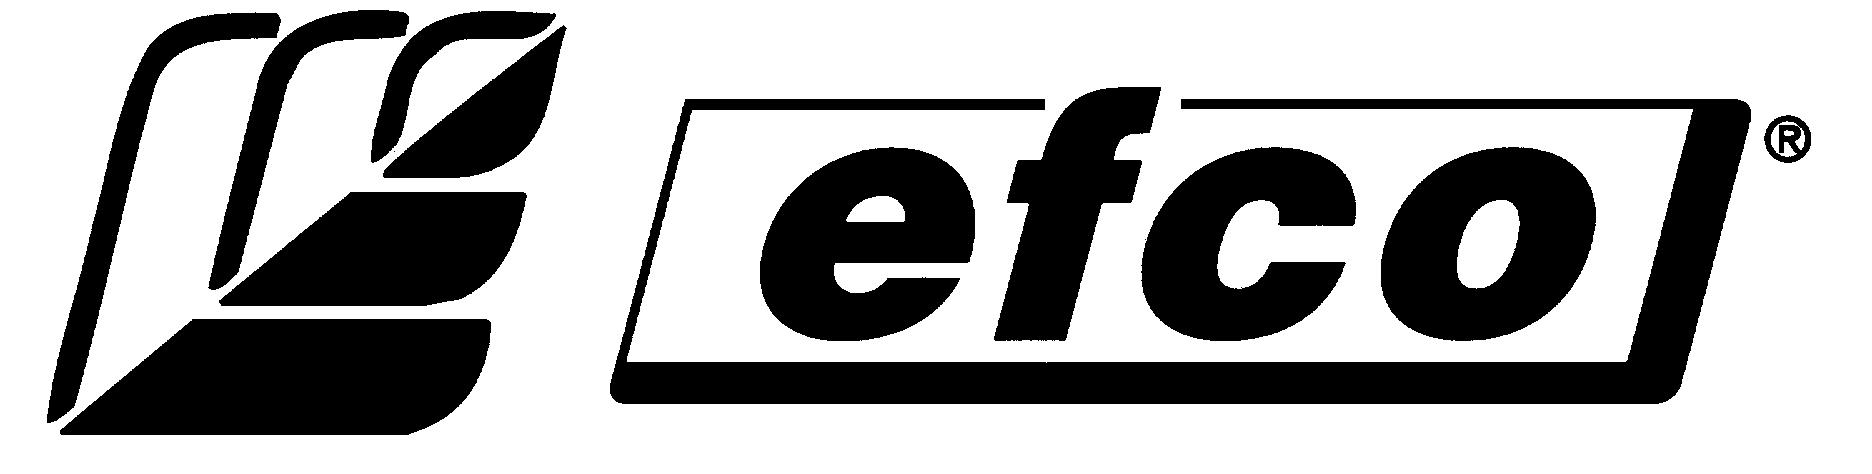 Enfoco Logo photo - 1